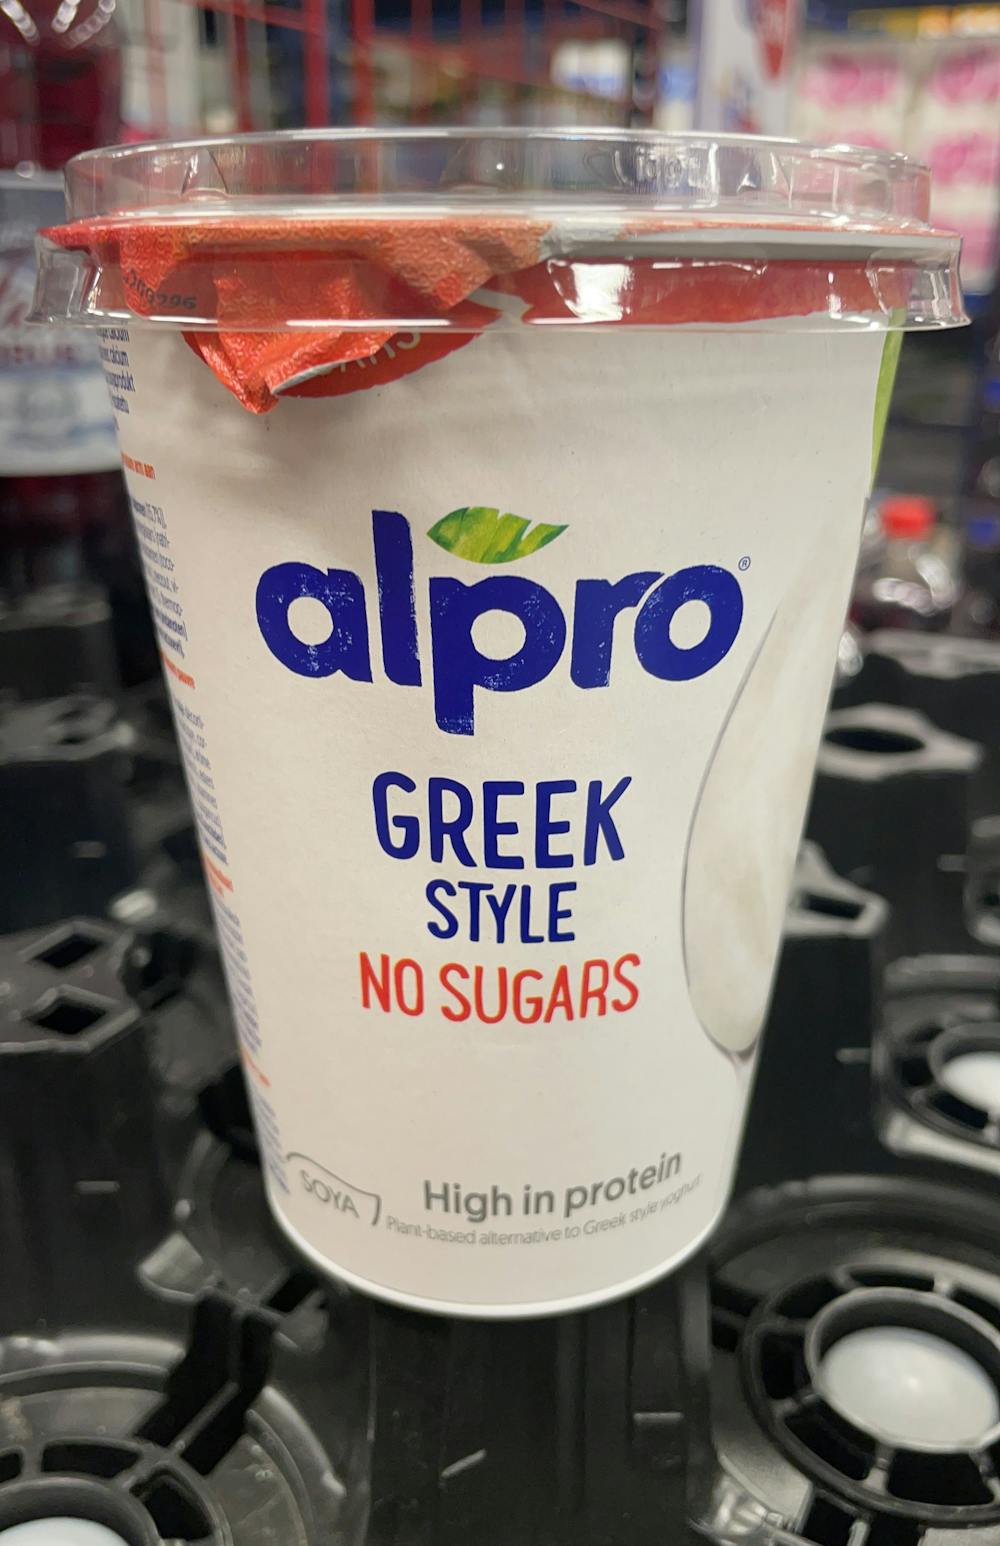 Greek style no sugars, Alpro